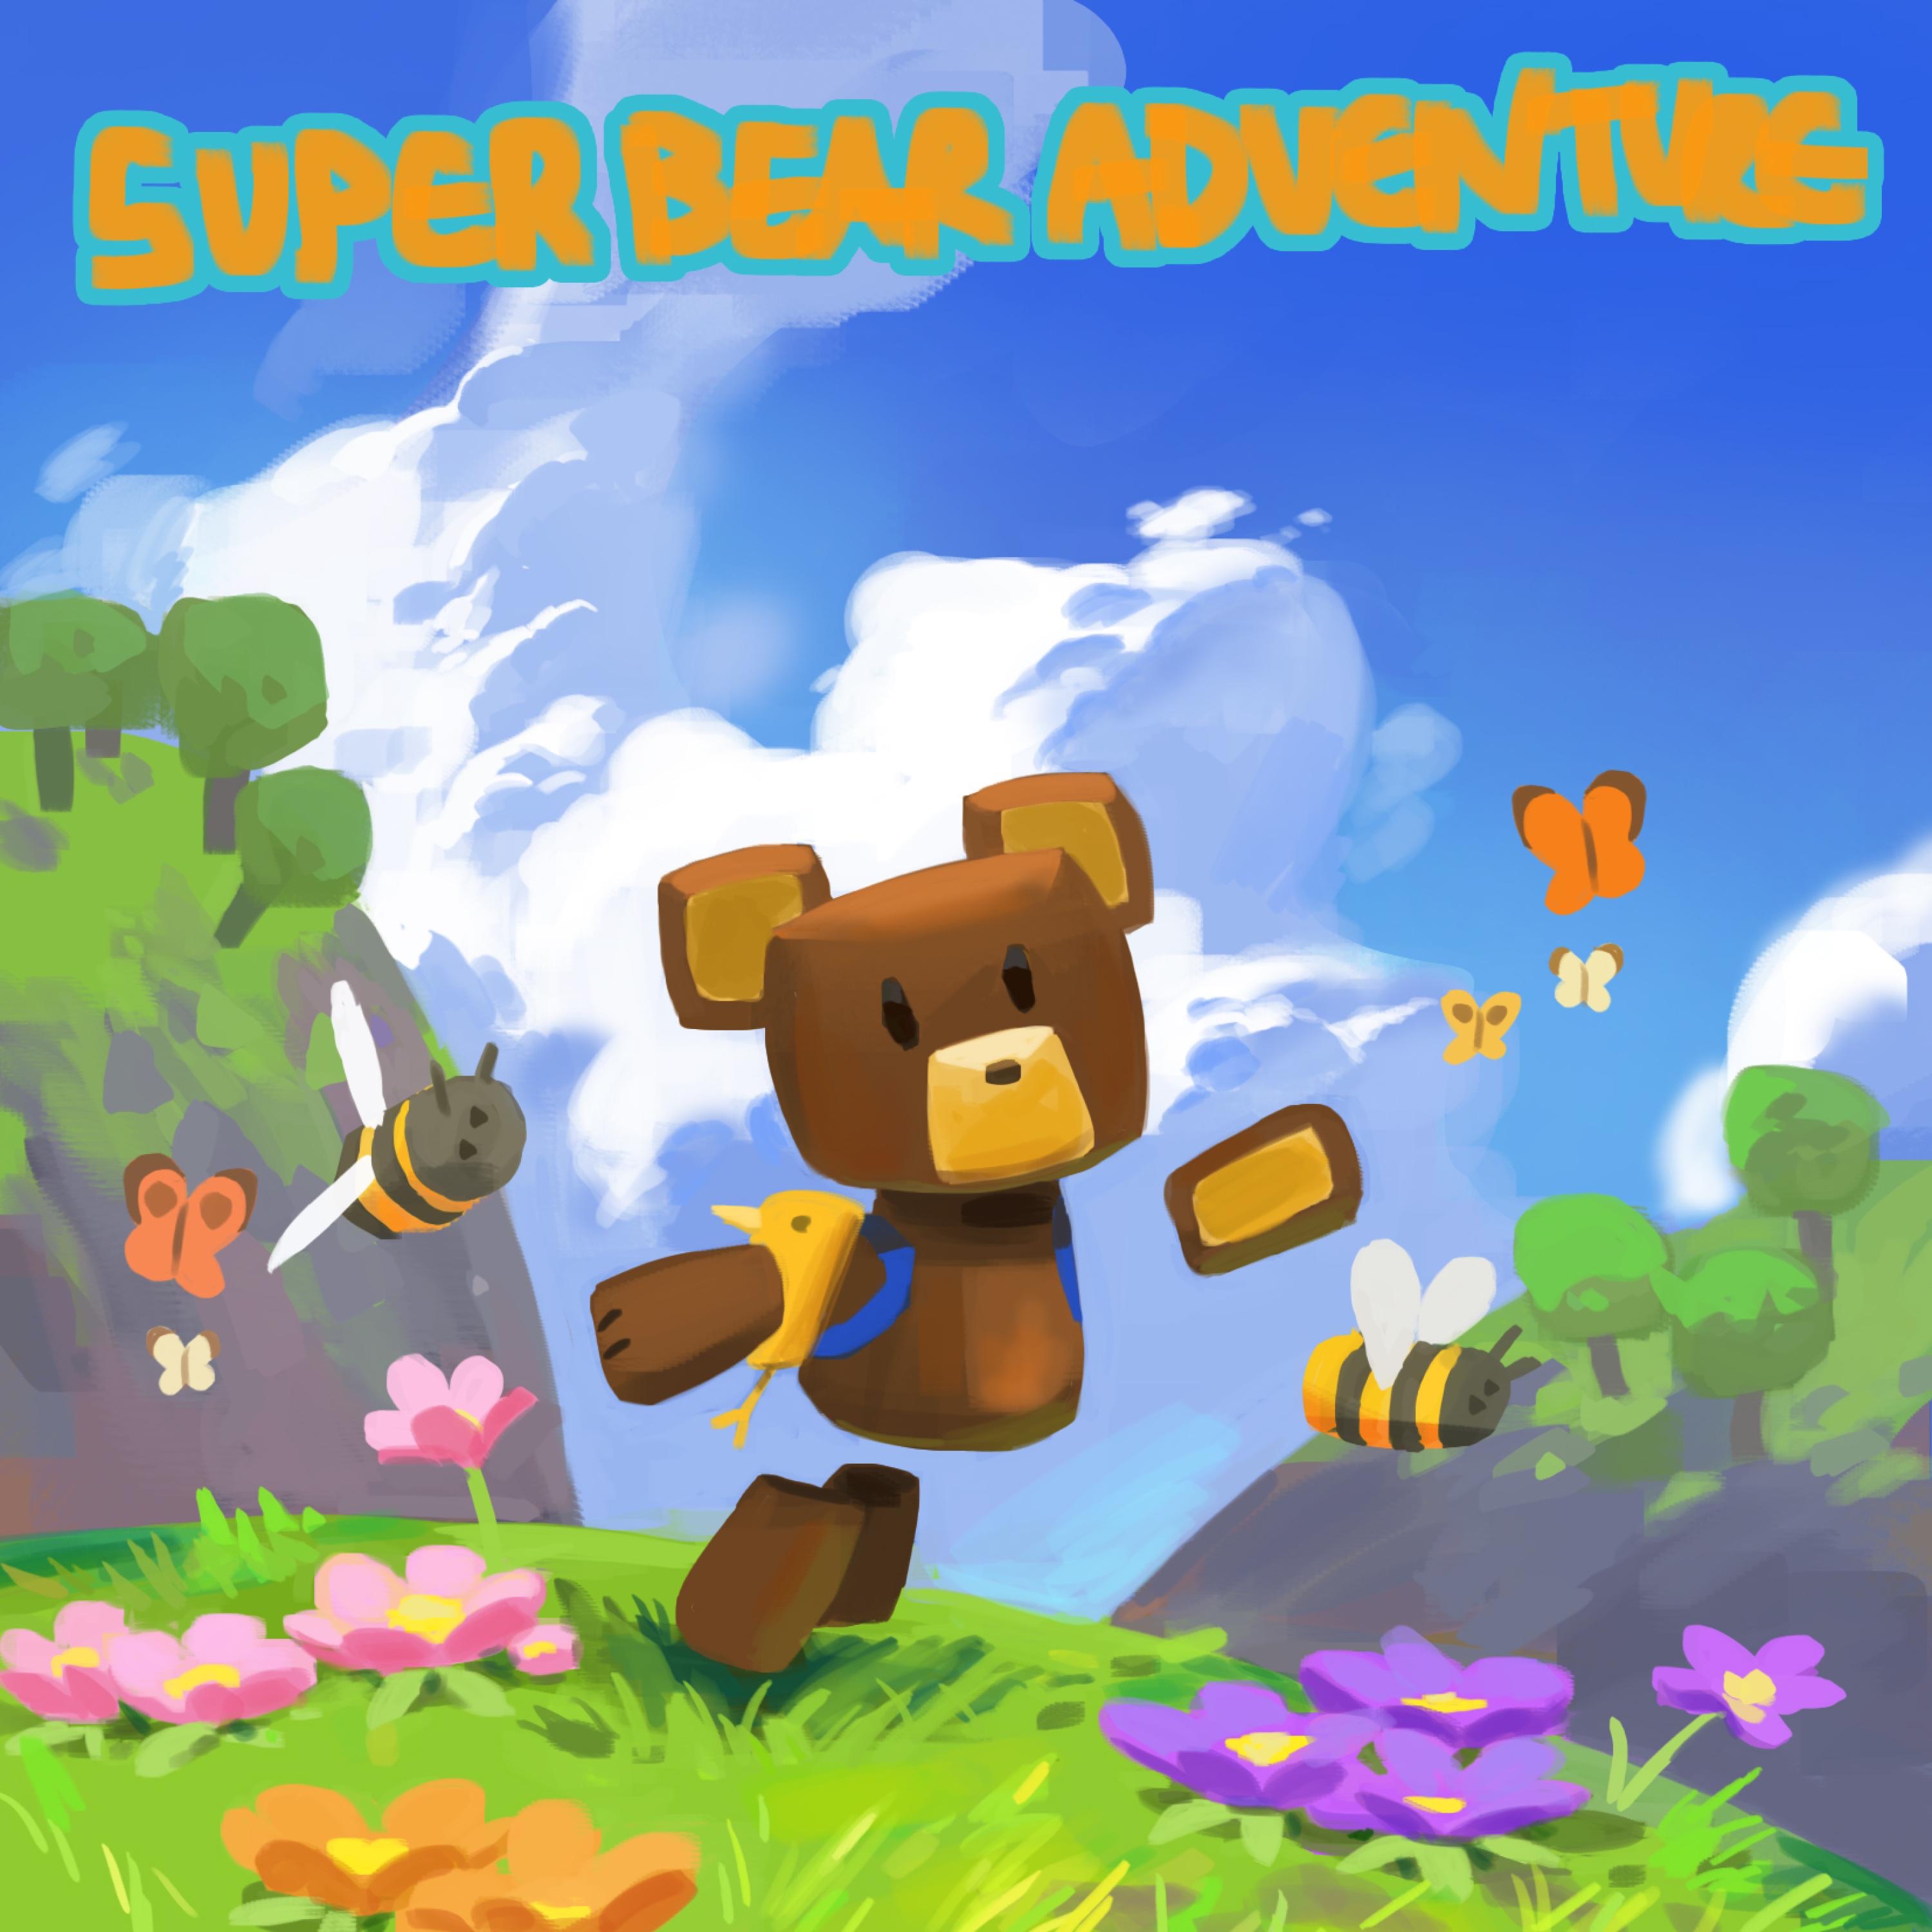 Super bear adventure 11.0 0. Bear Adventure игра. Супер Беар адвенчер. Приключения супер мишки. Супер беатвинчер.